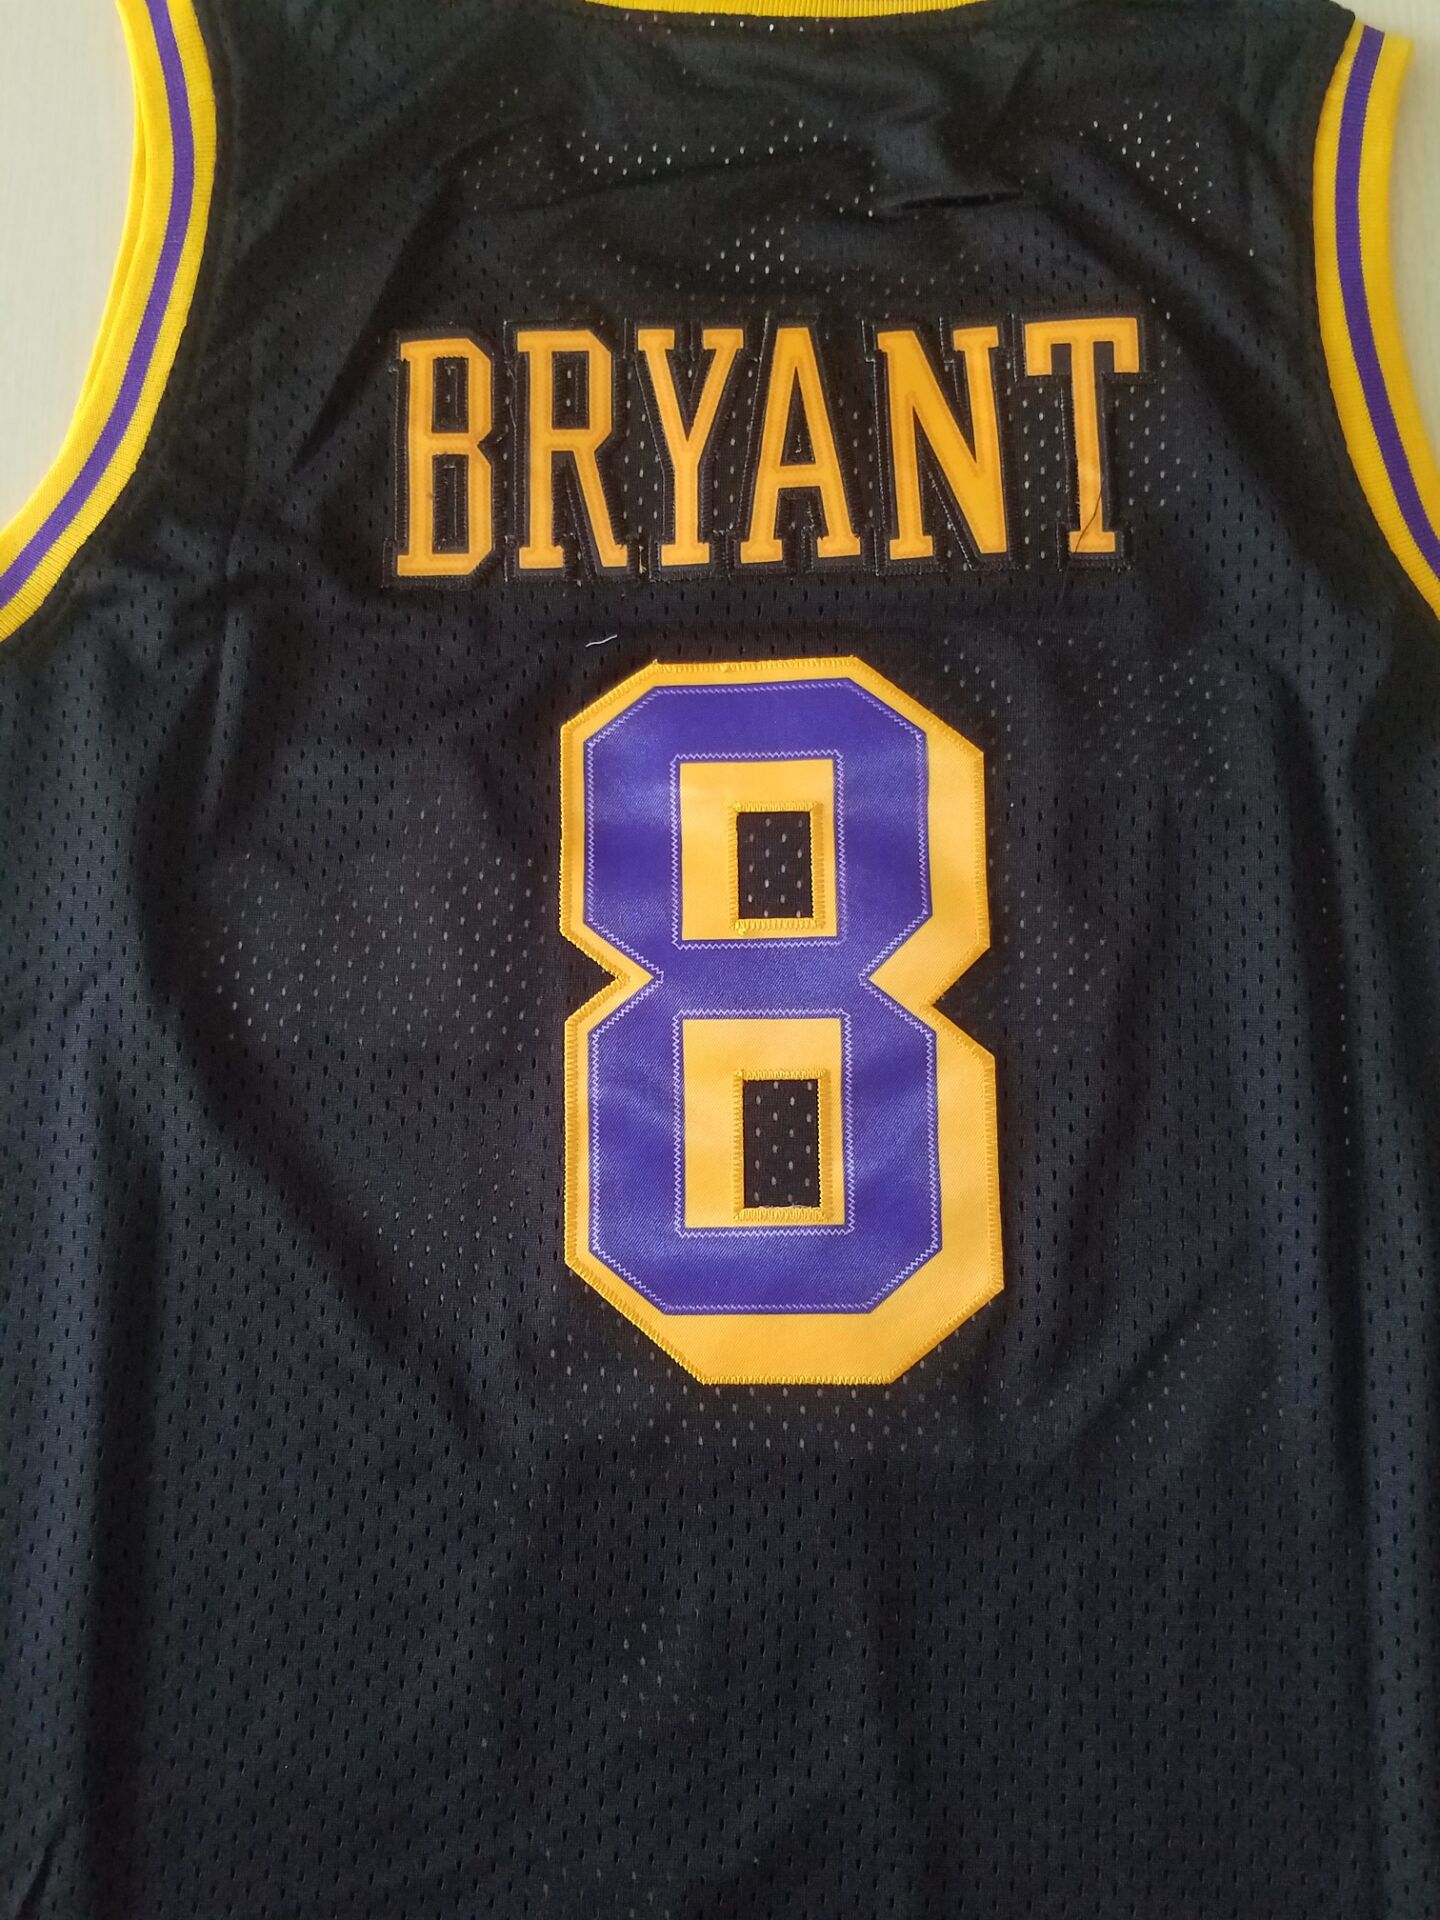 Men's Los Angeles Lakers Kobe Bryant #8 Black Classics Player Jersey